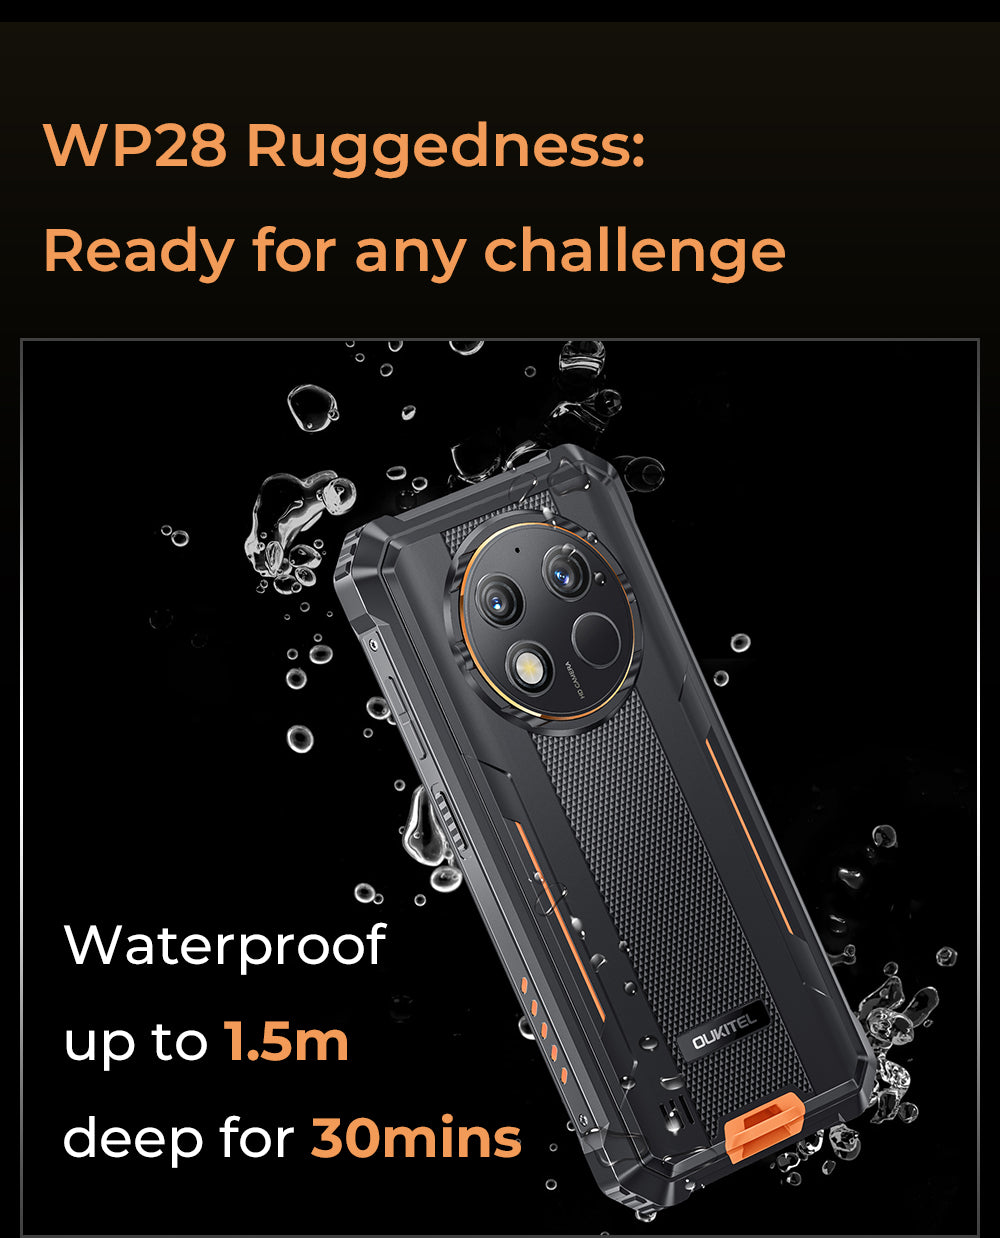 Oukitel WP28 6.52-inch 10600mAh Battery Android 13 Rugged Phone (8